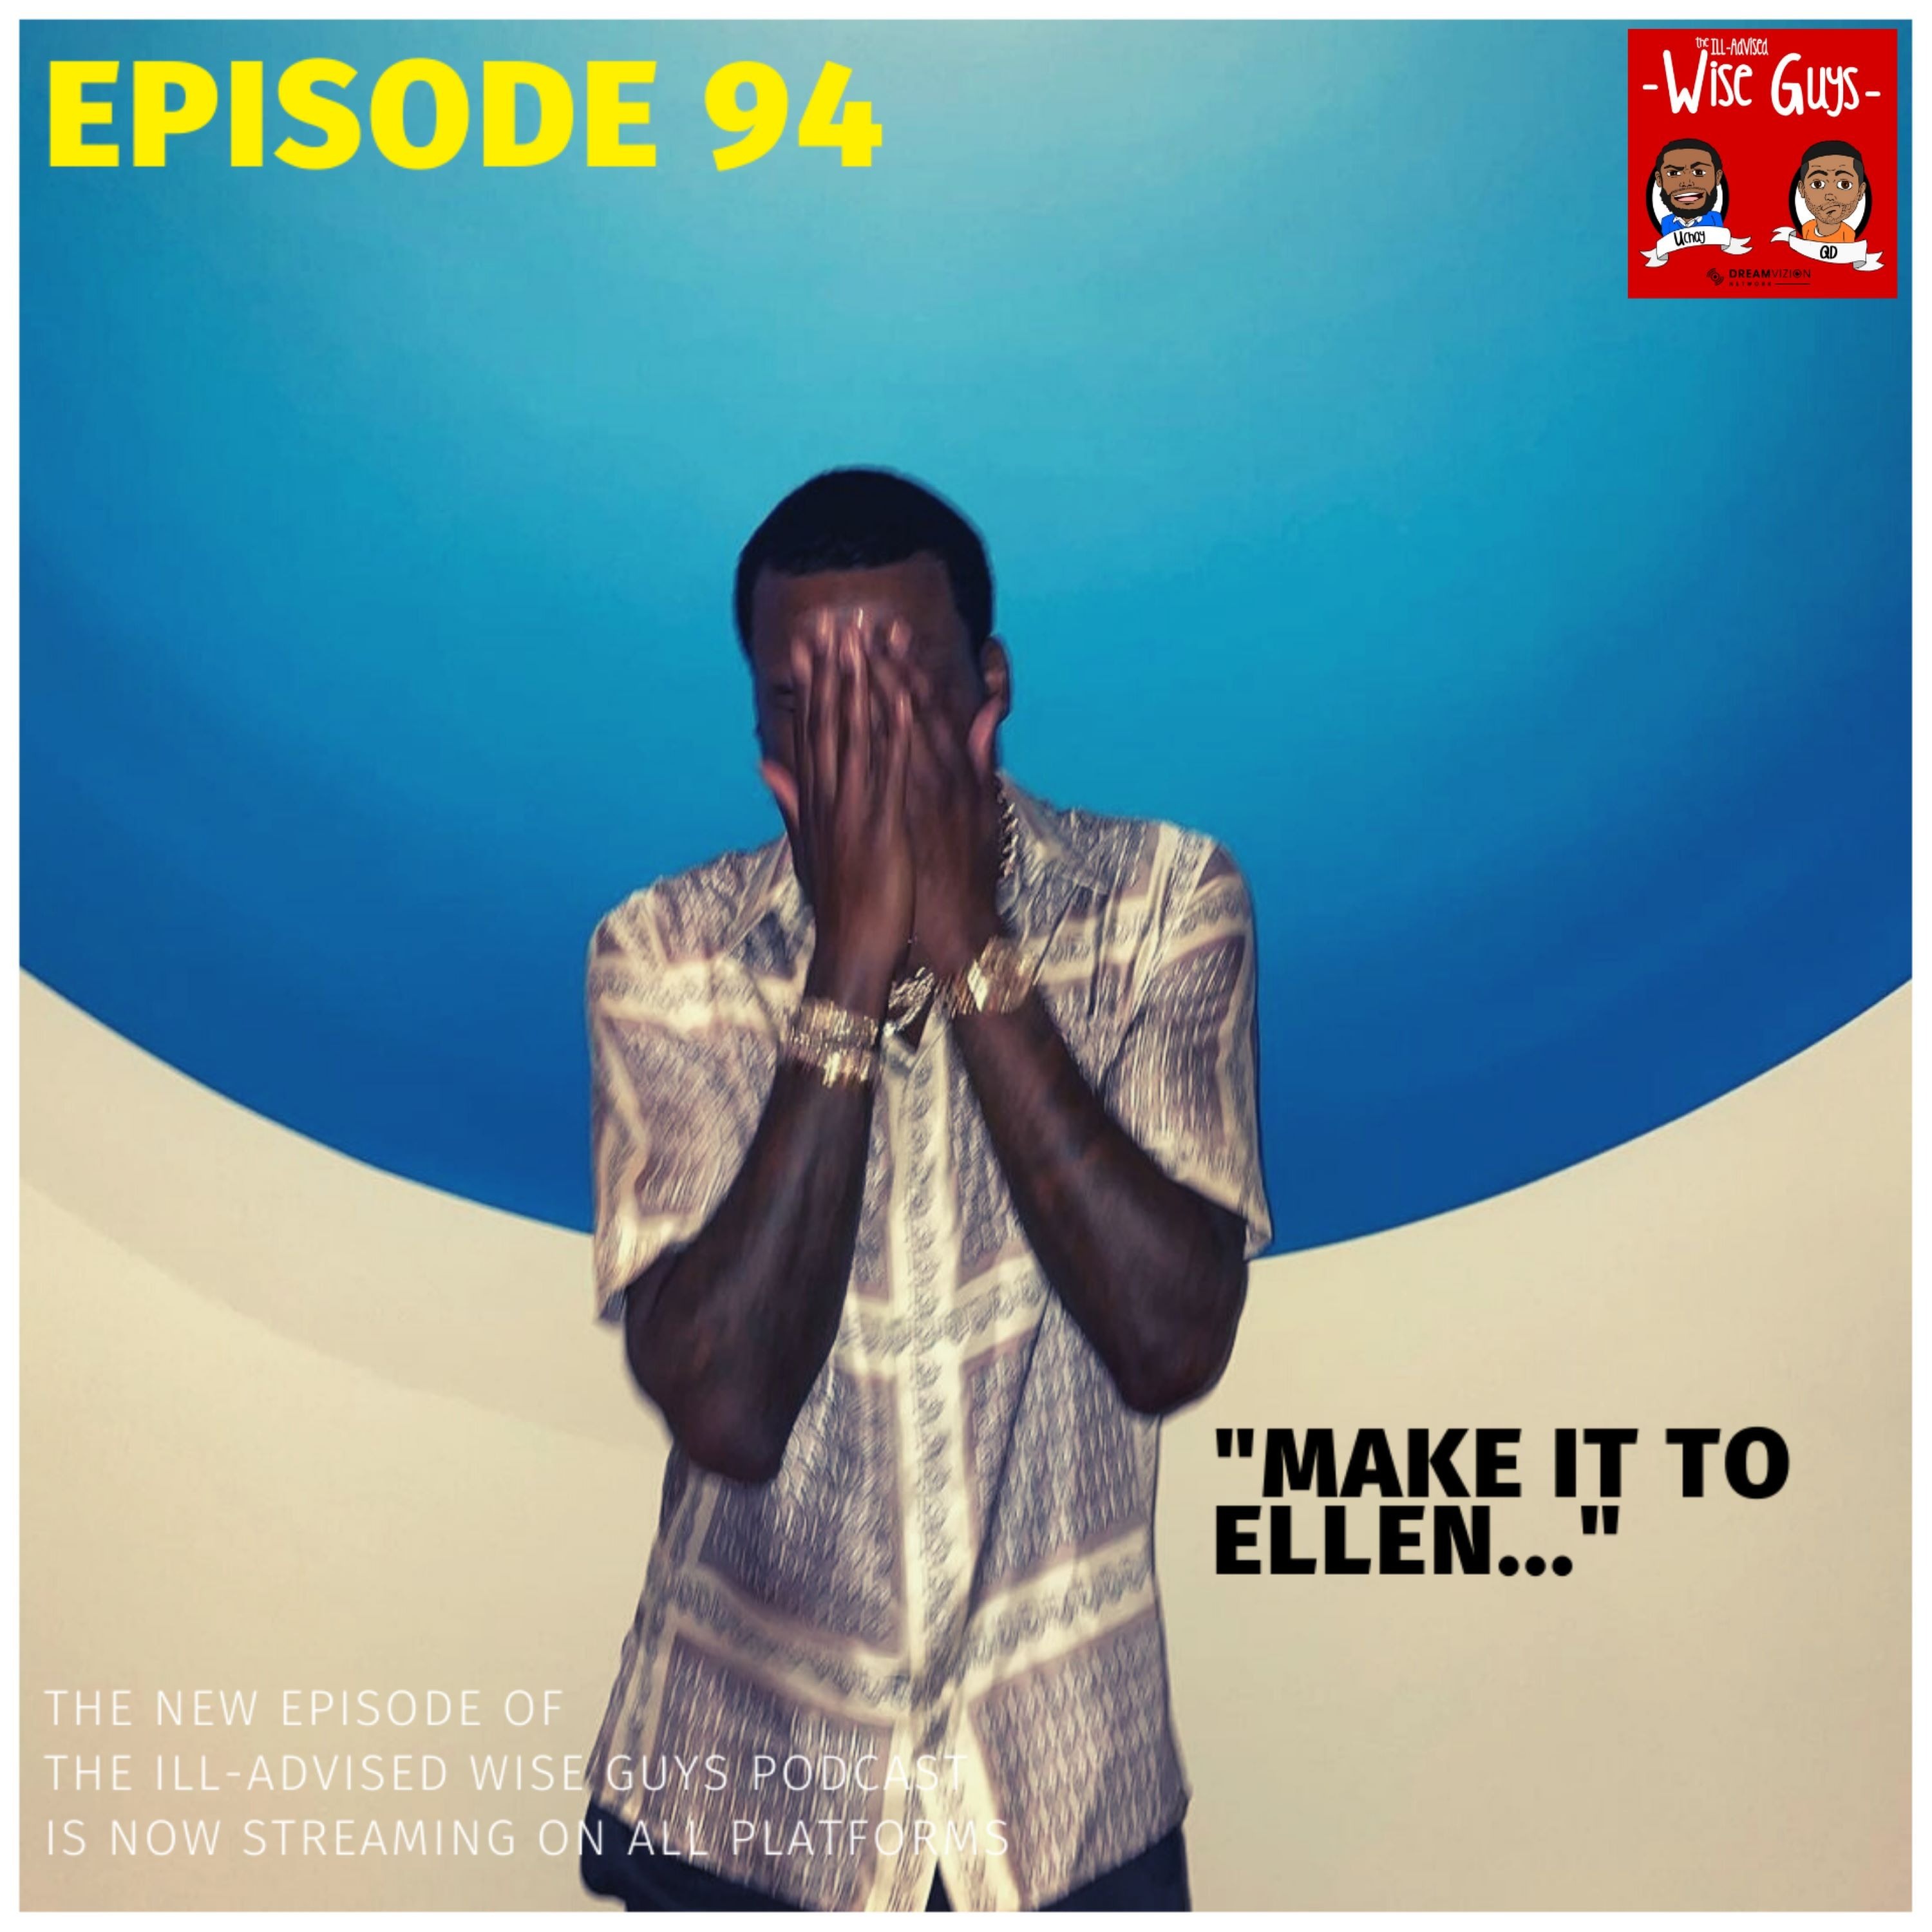 Episode 94 - "Make It To Ellen..." Image